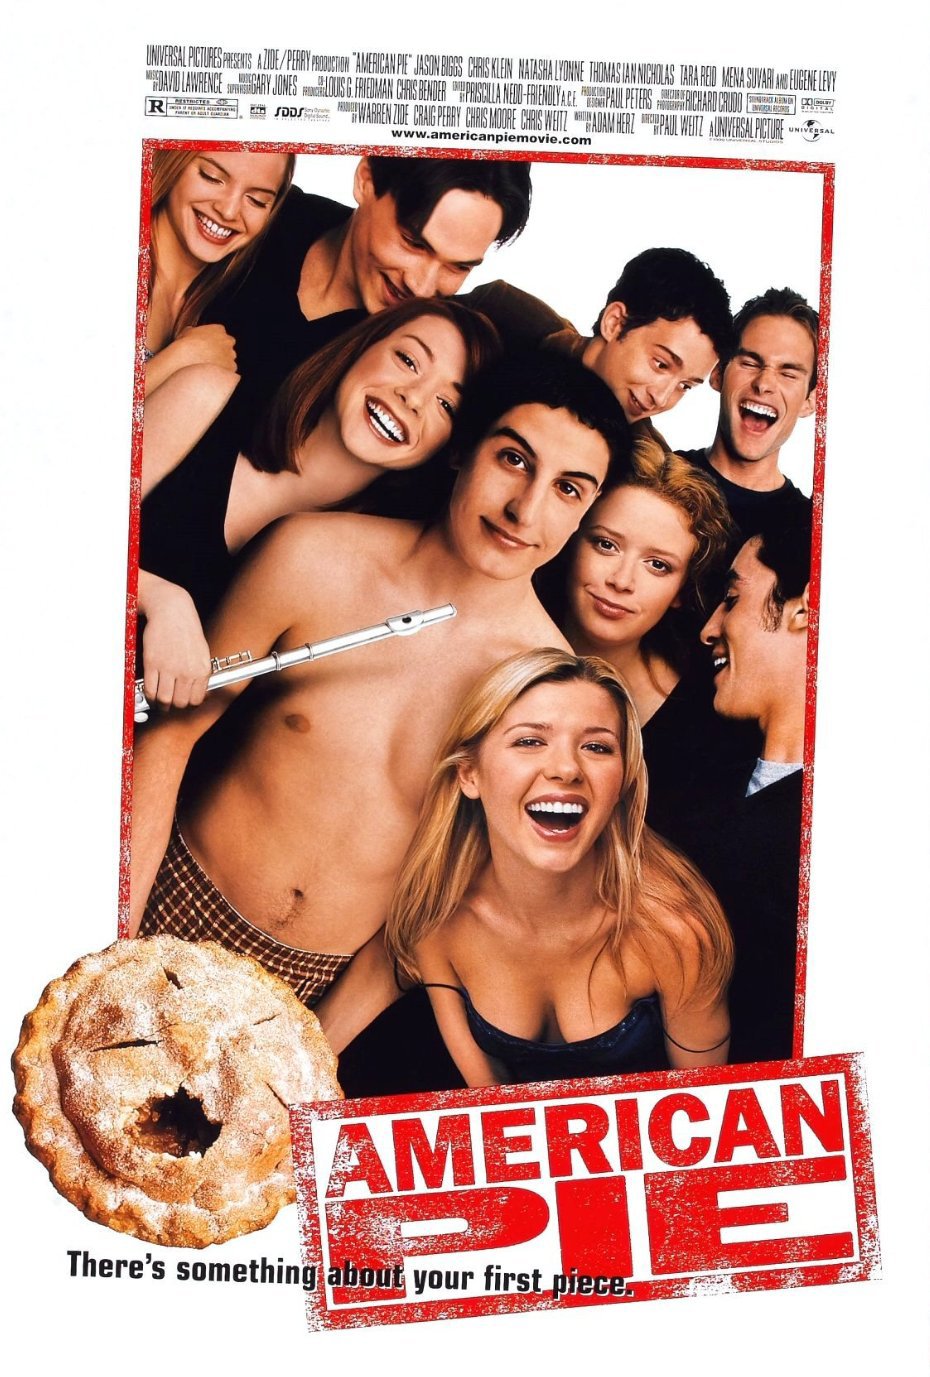 American pie 1 full movie english